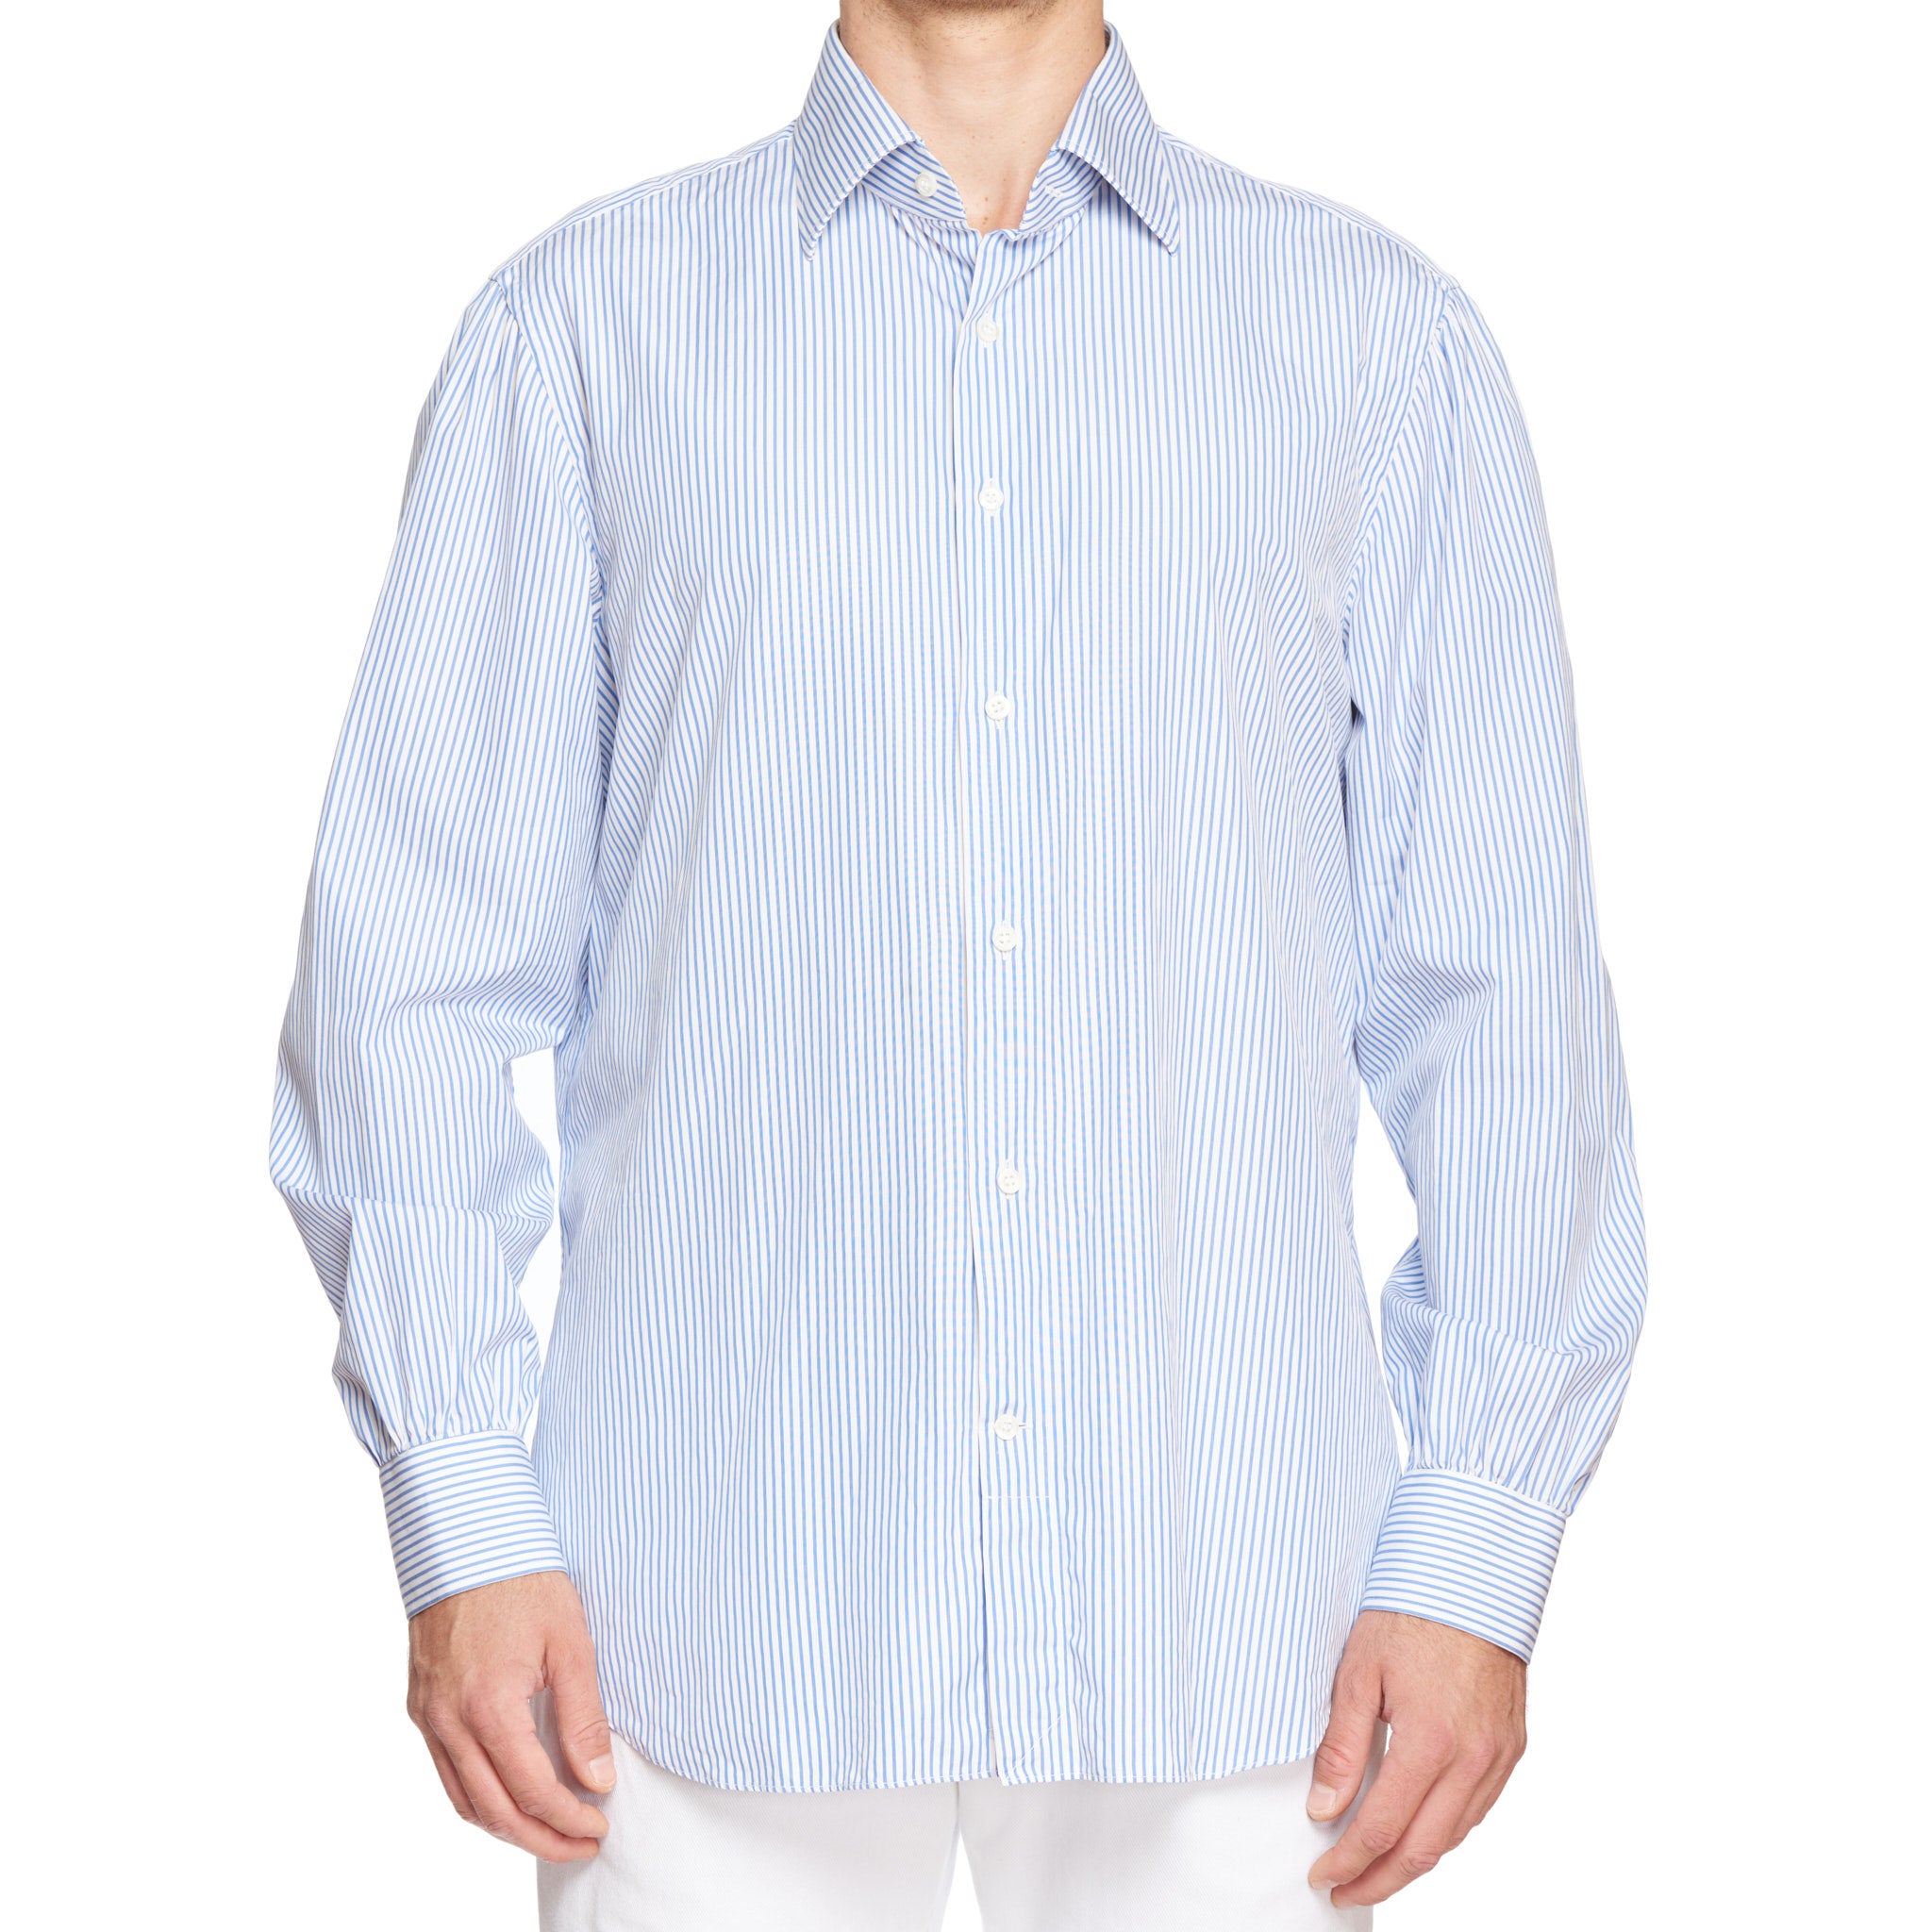 BESPOKE ATHENS Handmade Blue Striped Poplin Cotton Dress Shirt EU 45 US 18 BESPOKE ATHENS